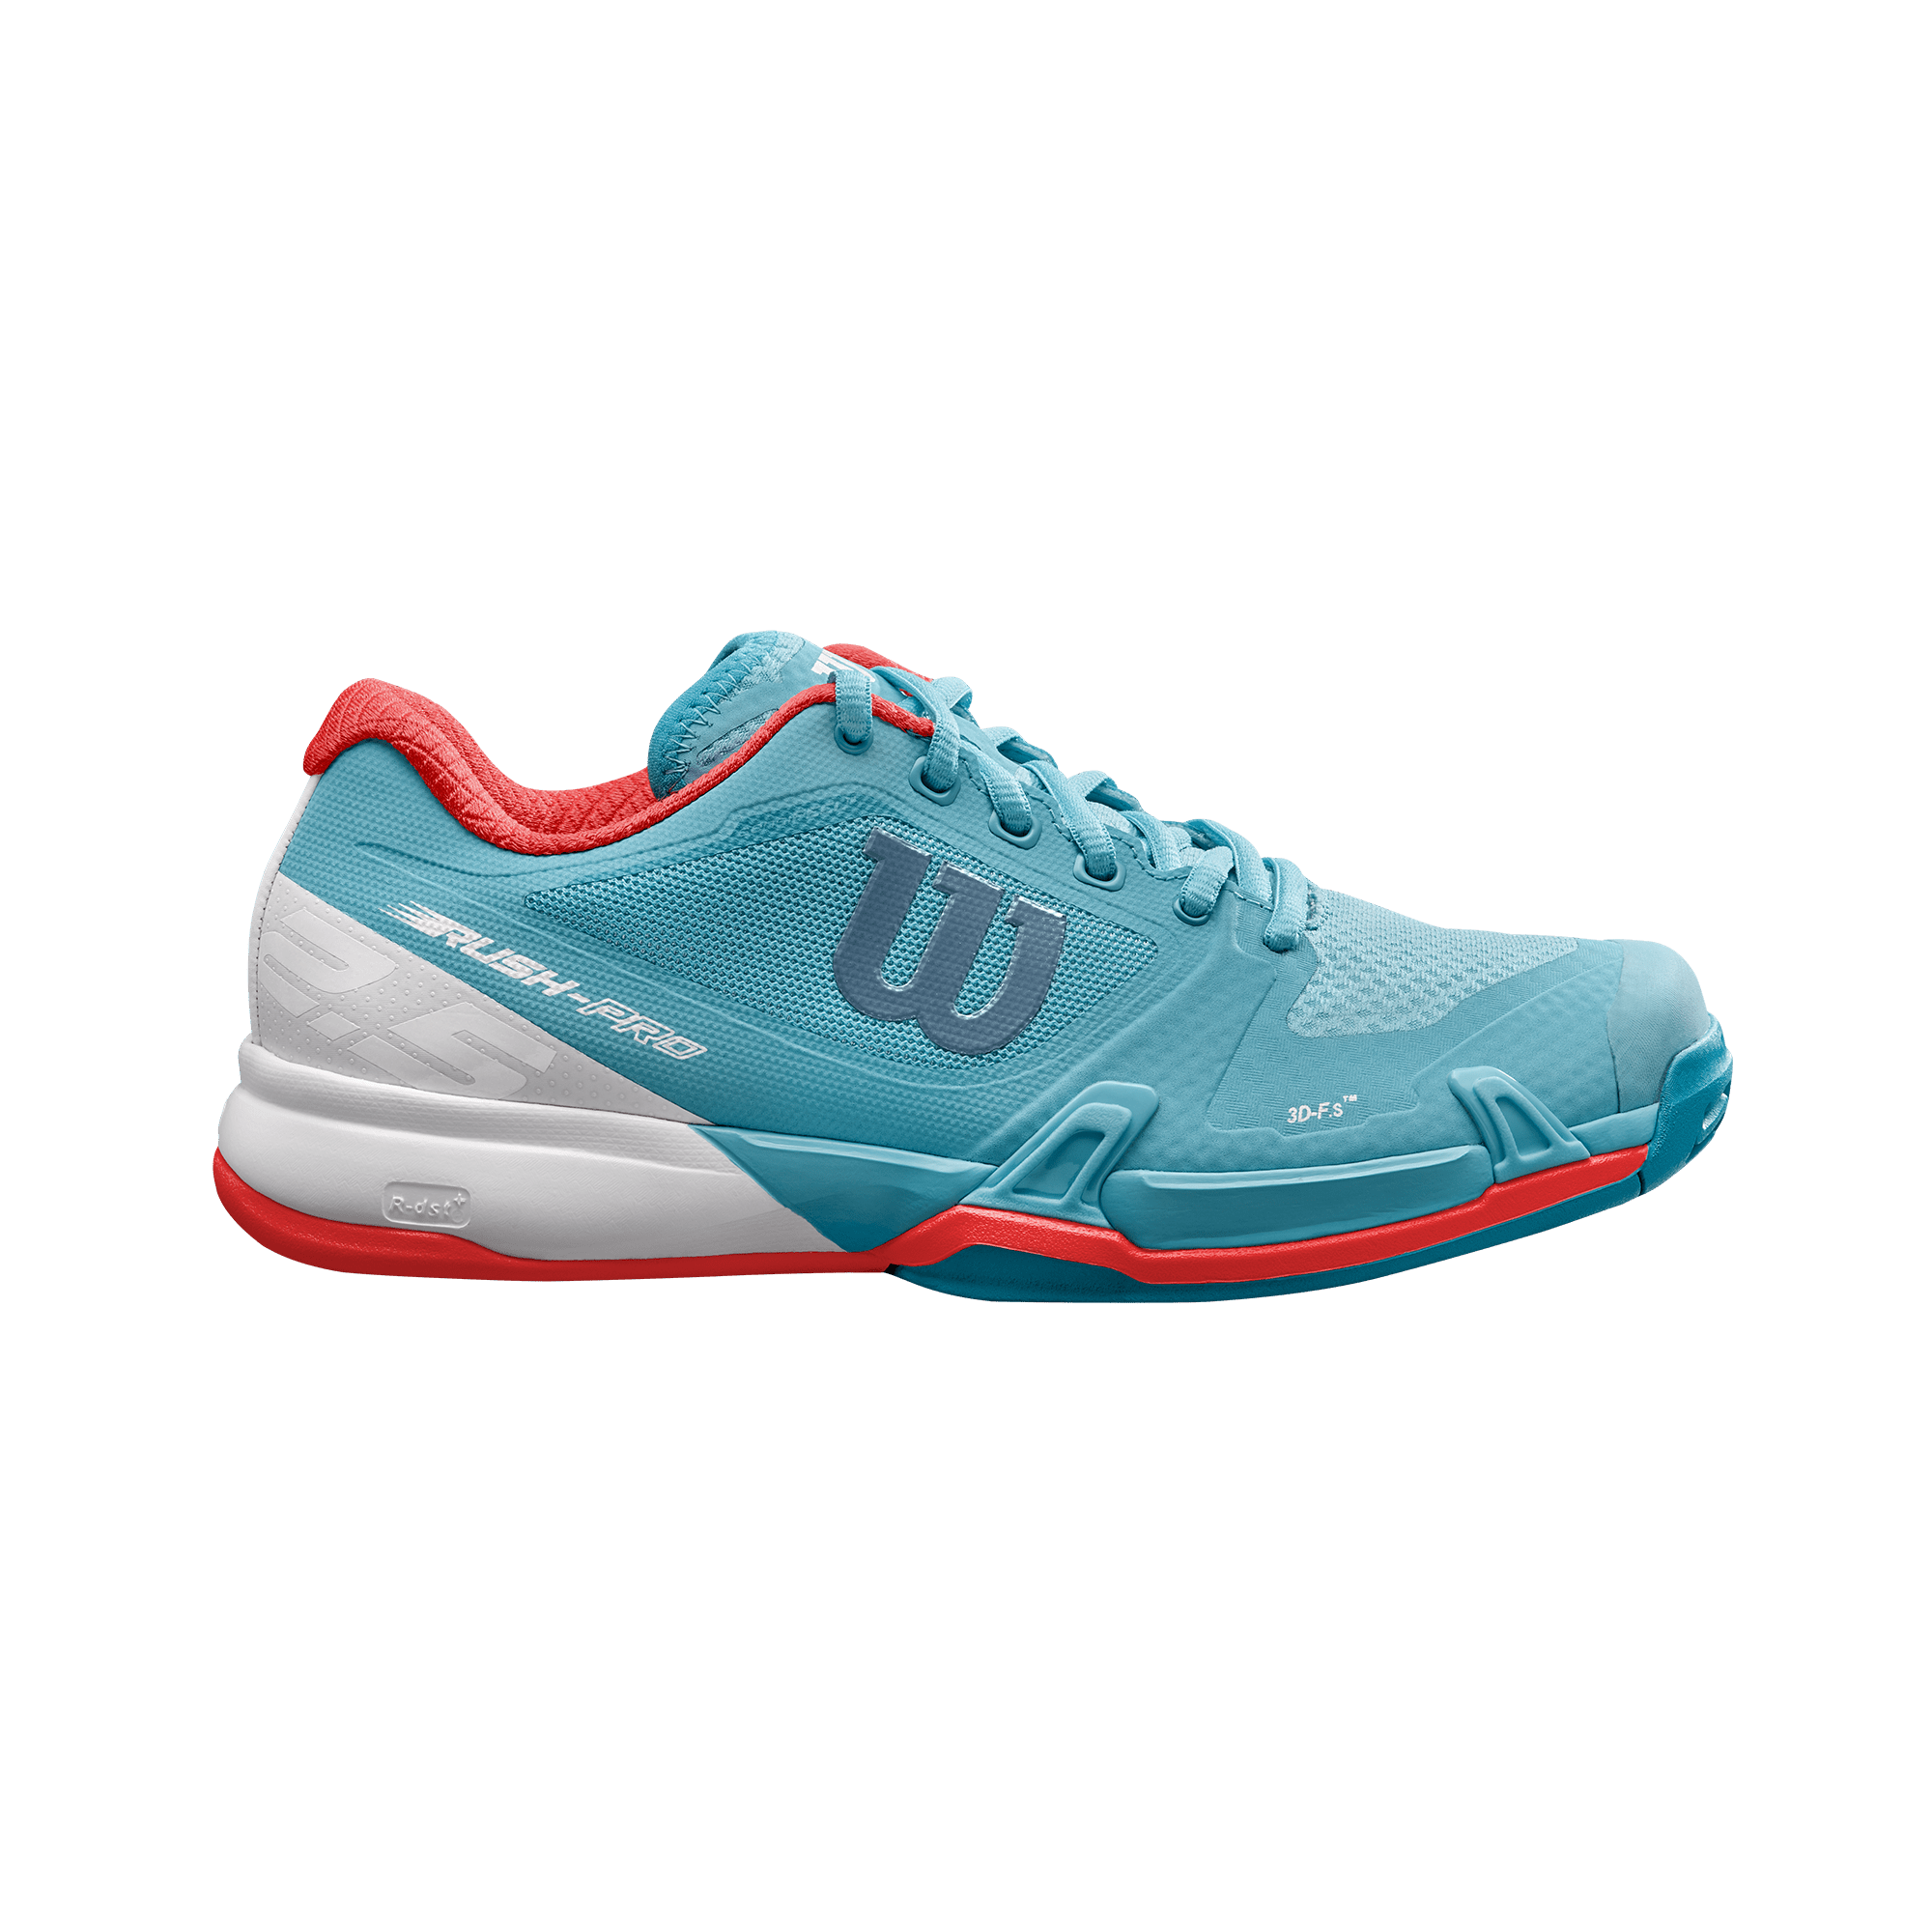 wilson rush pro 2.5 tennis shoes